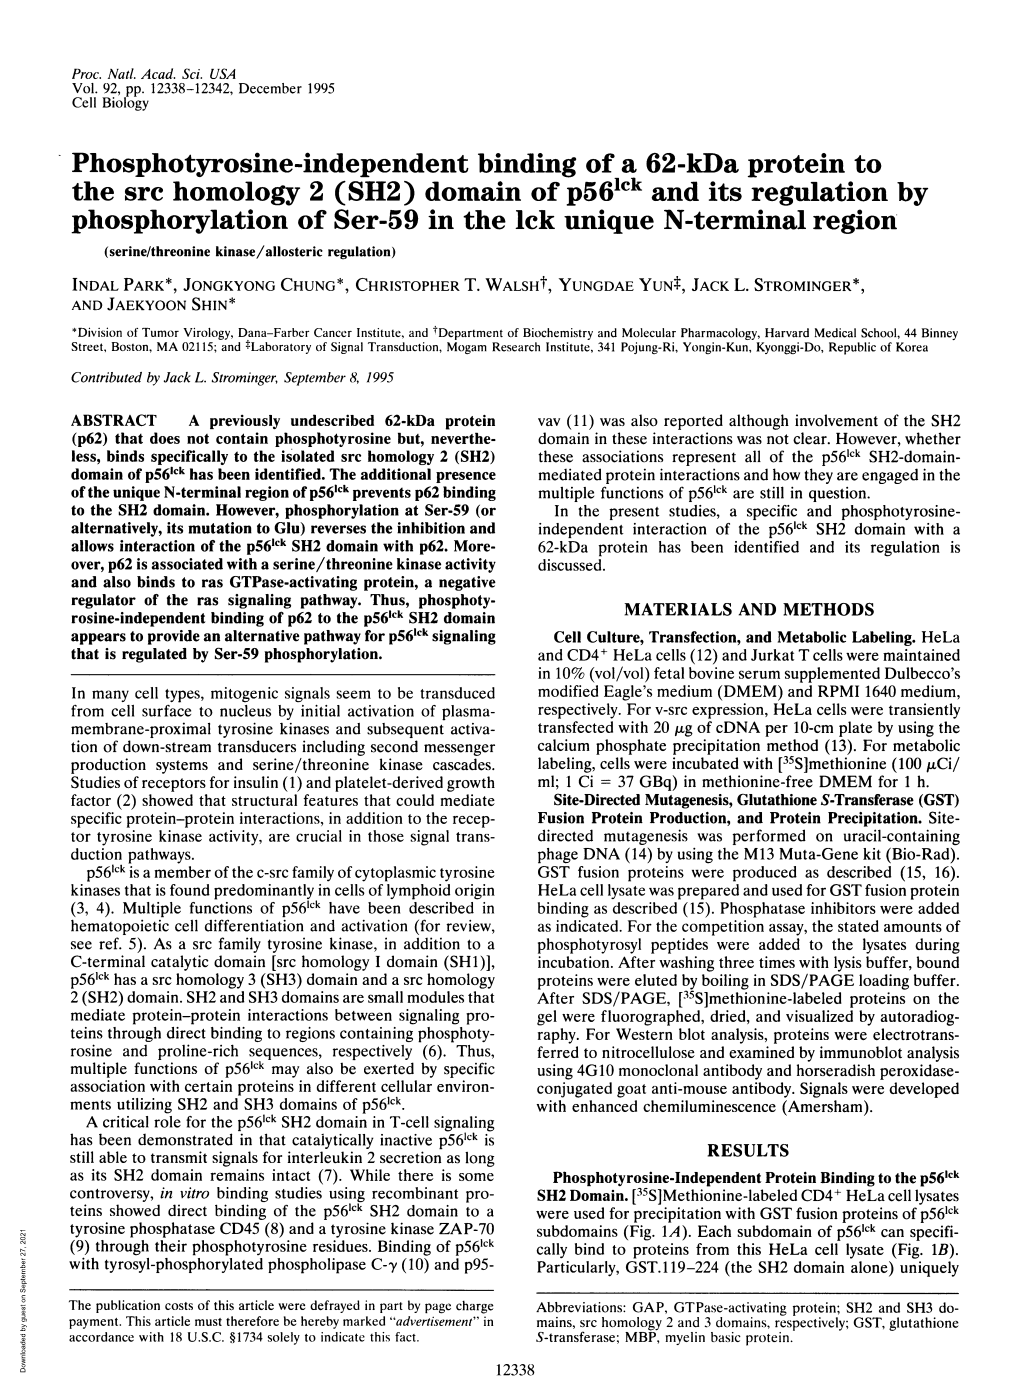 Phosphotyrosine-Independent Binding Ofa 62-Kda Protein To